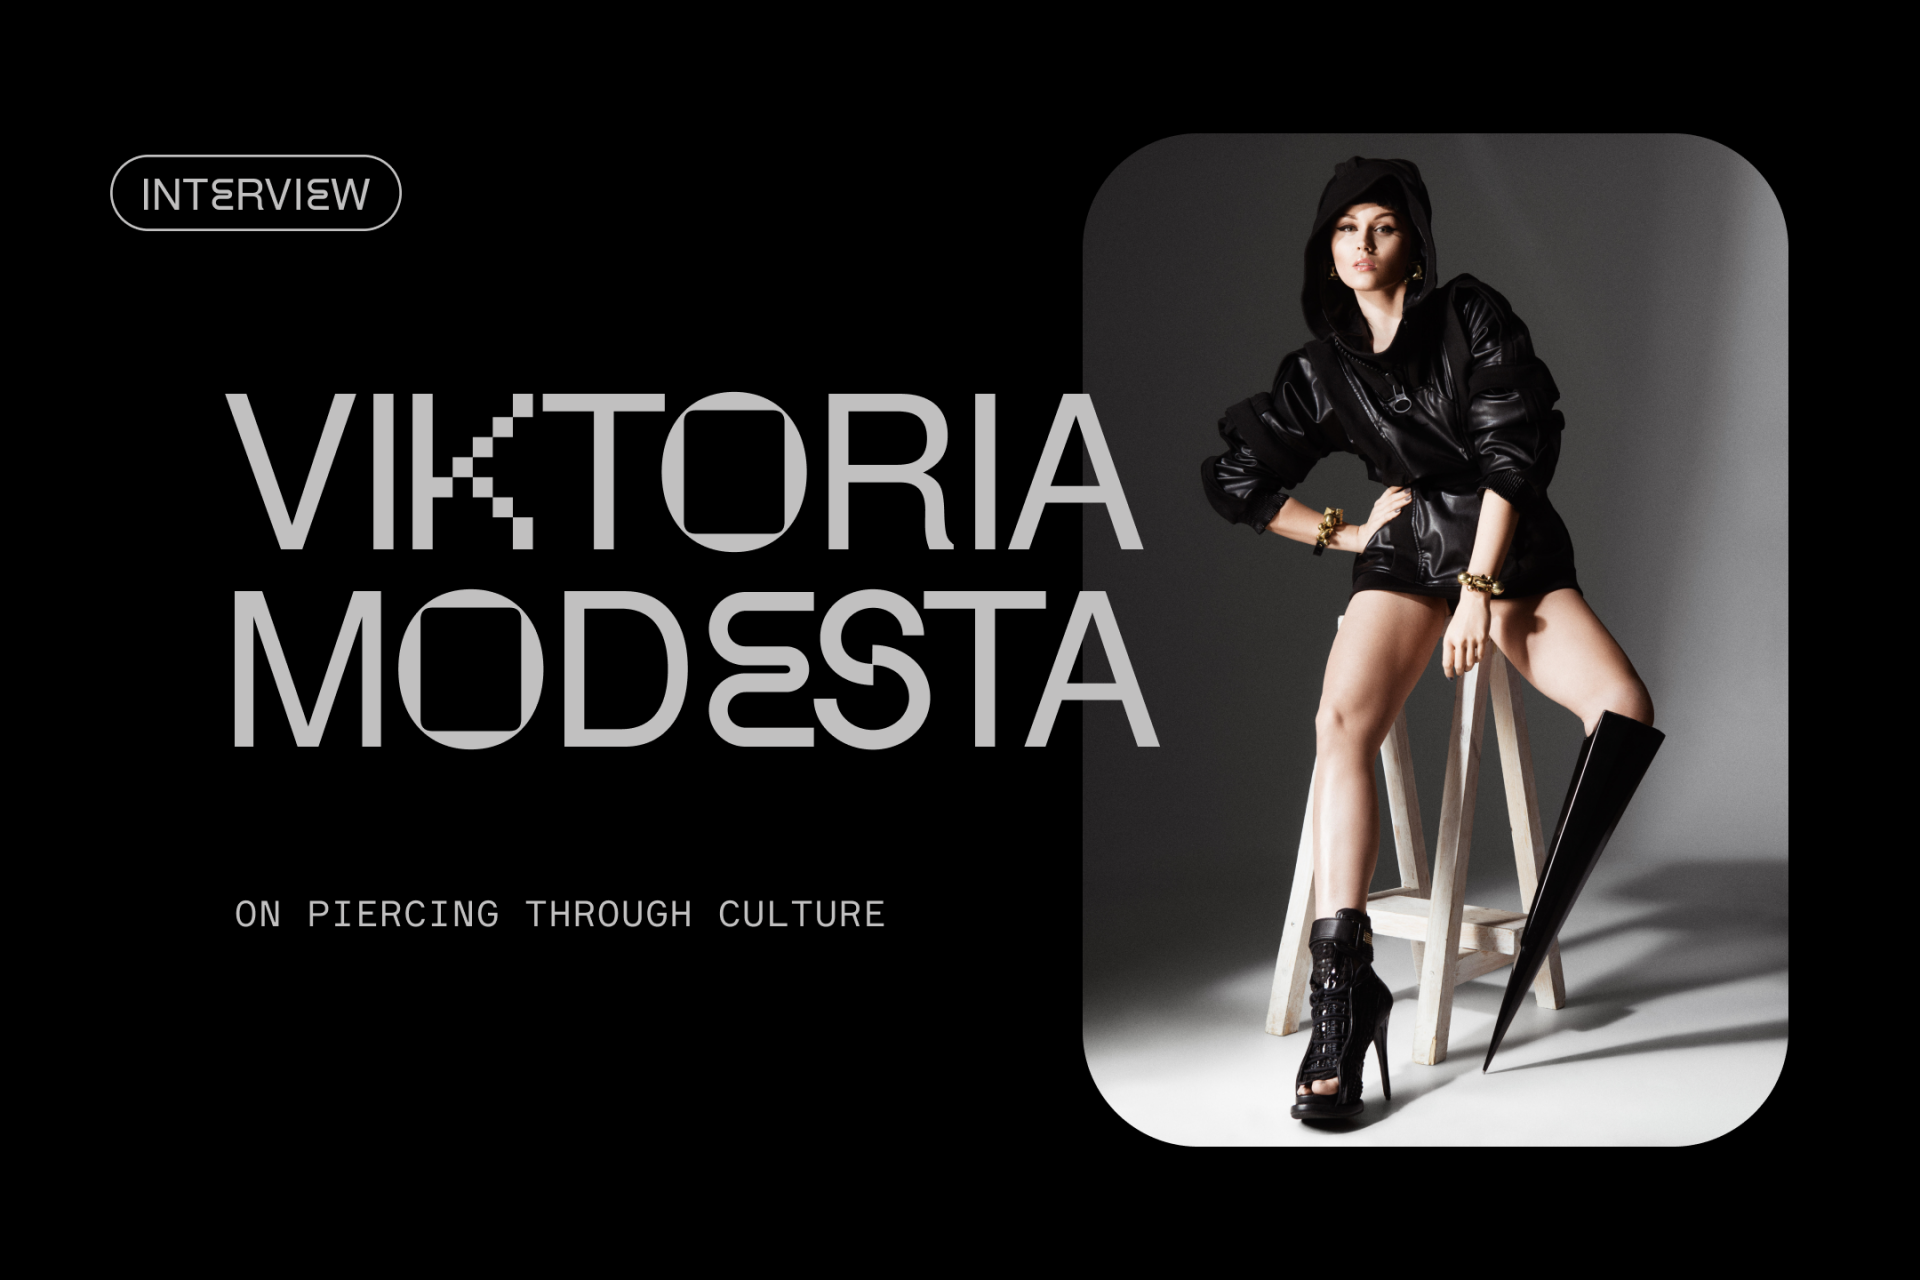 Bionic pop artist Viktoria Modesta on piercing through culture.